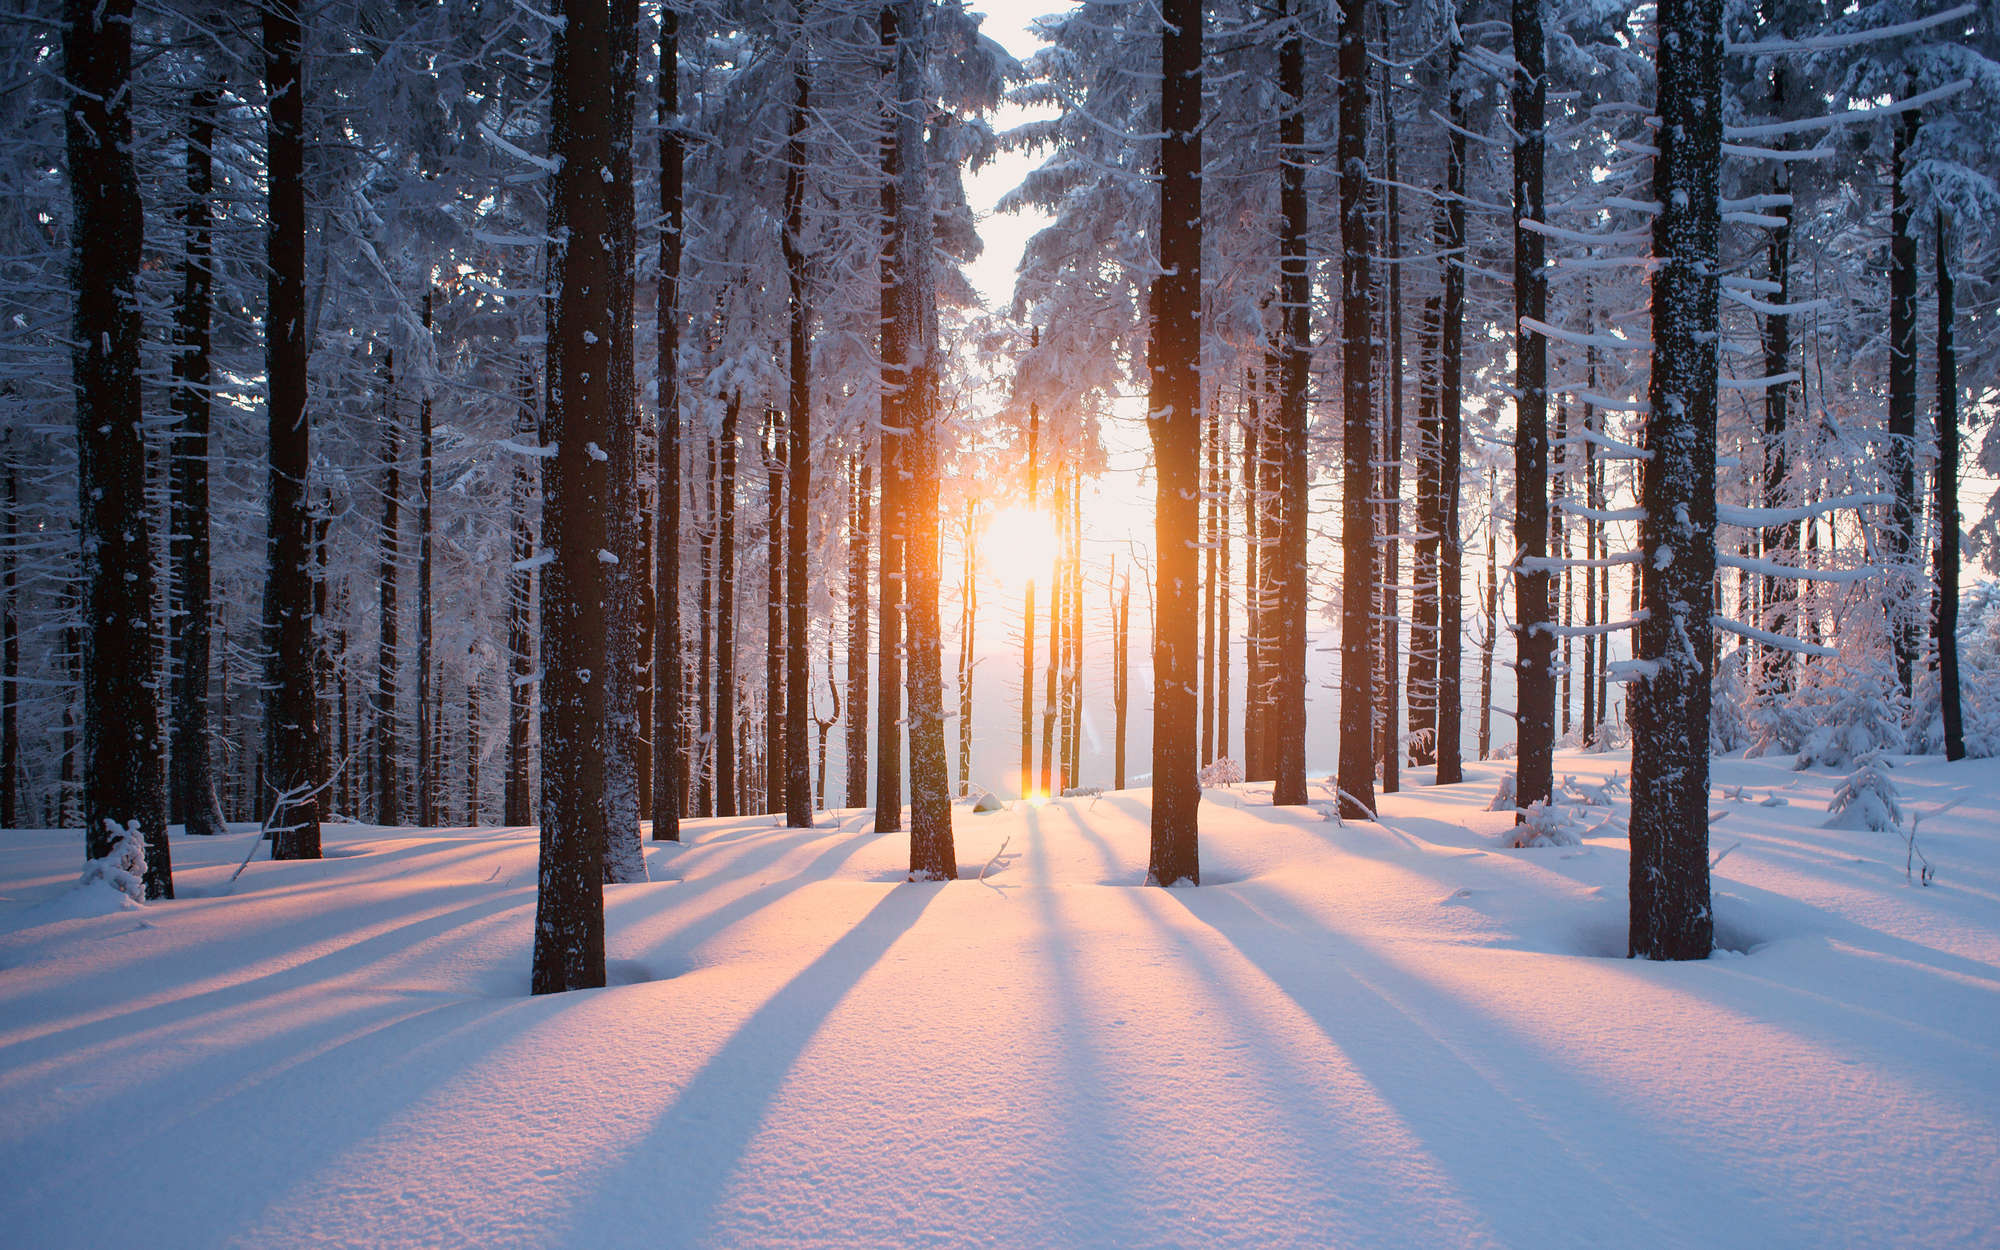             Digital behang sneeuw in het winterse bos - parelmoer glad vlies
        